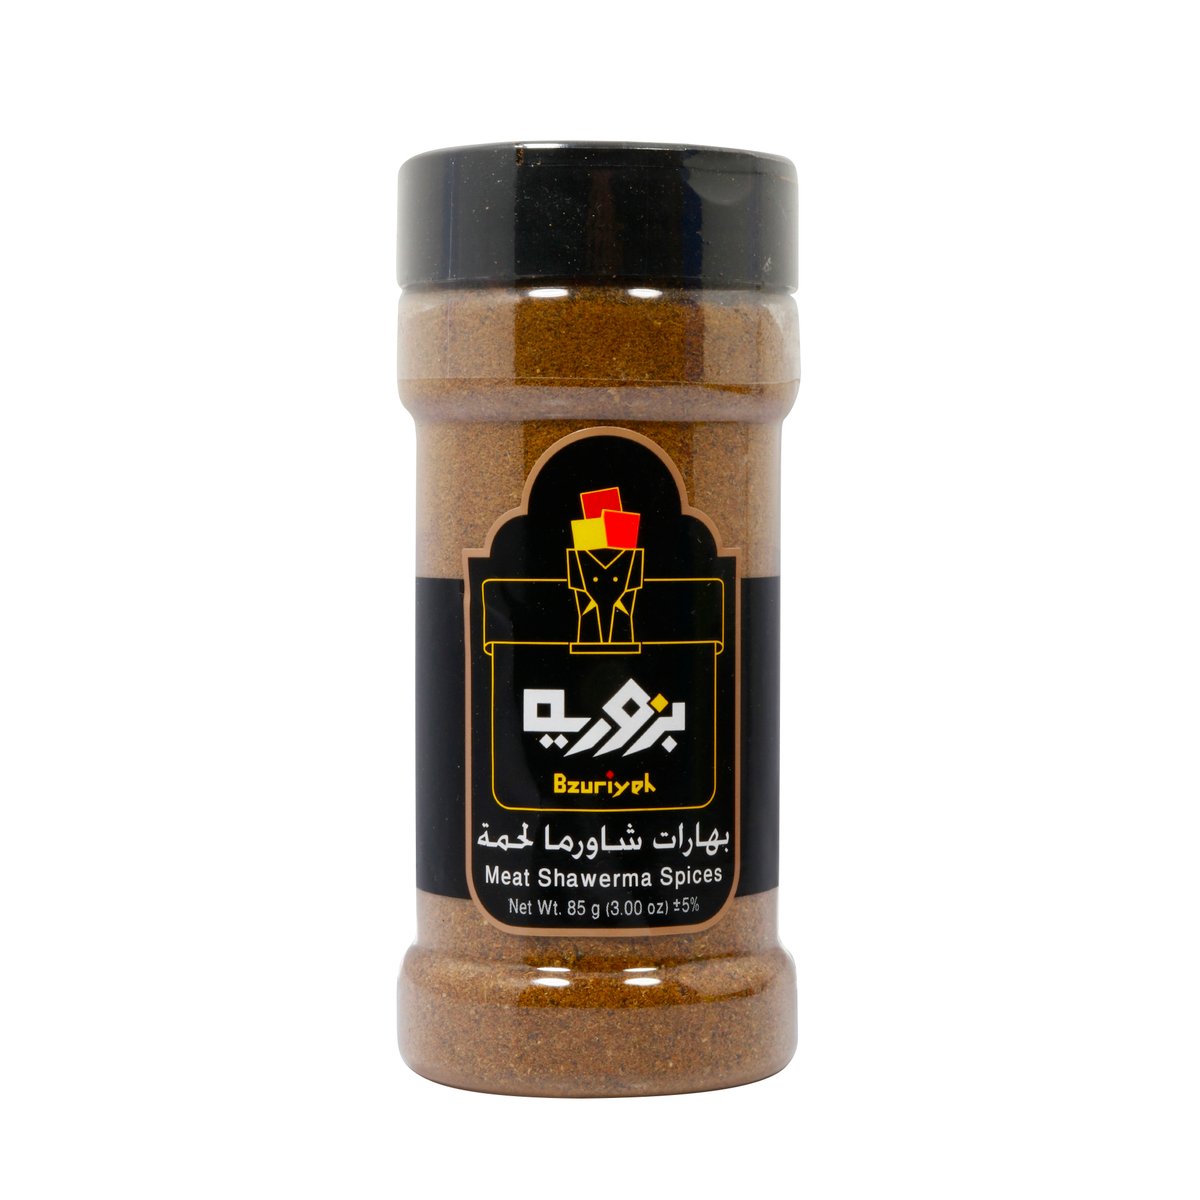 Bzuriyeh Meat Shawerma Spices 85g